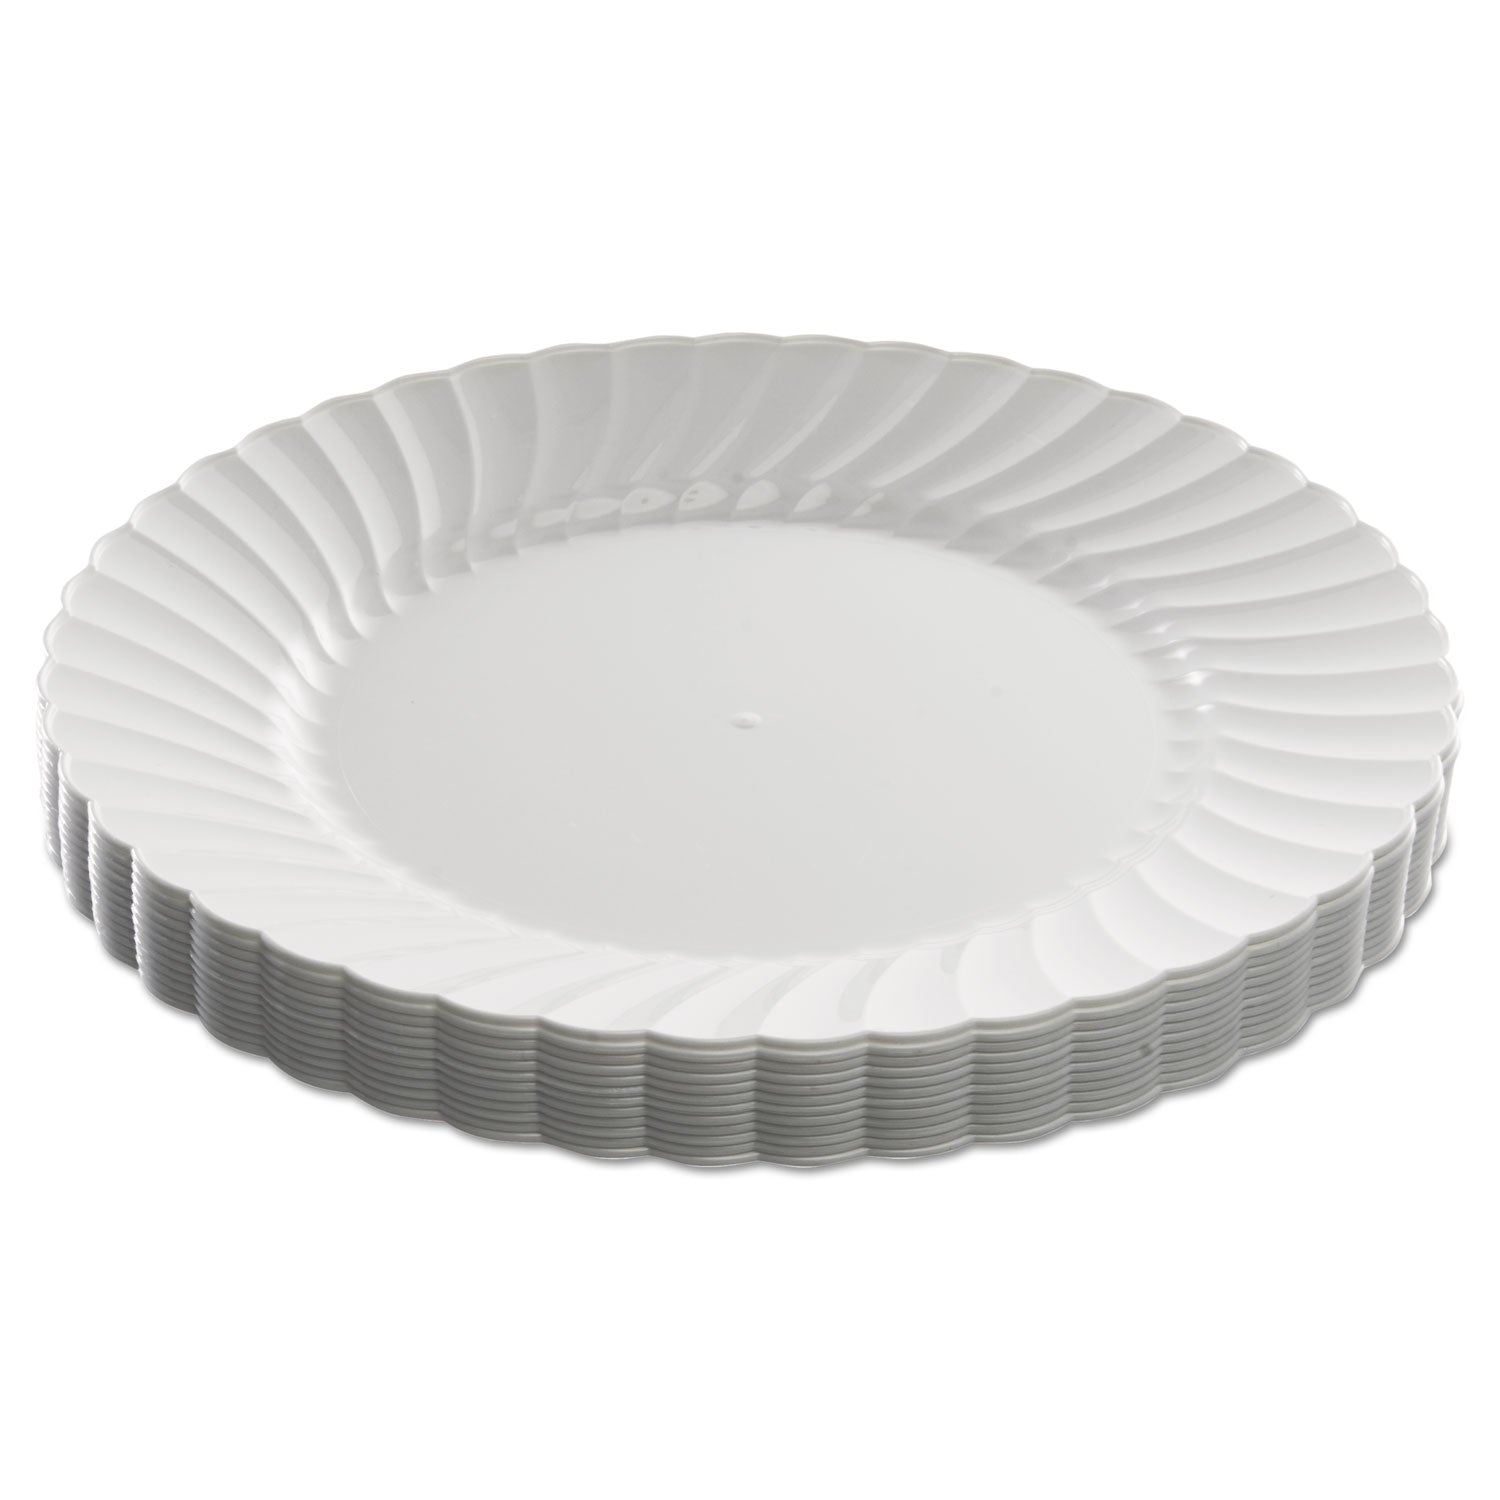 Classicware Plastic Dinnerware Plates, 9" dia, White, 12/Pack - 